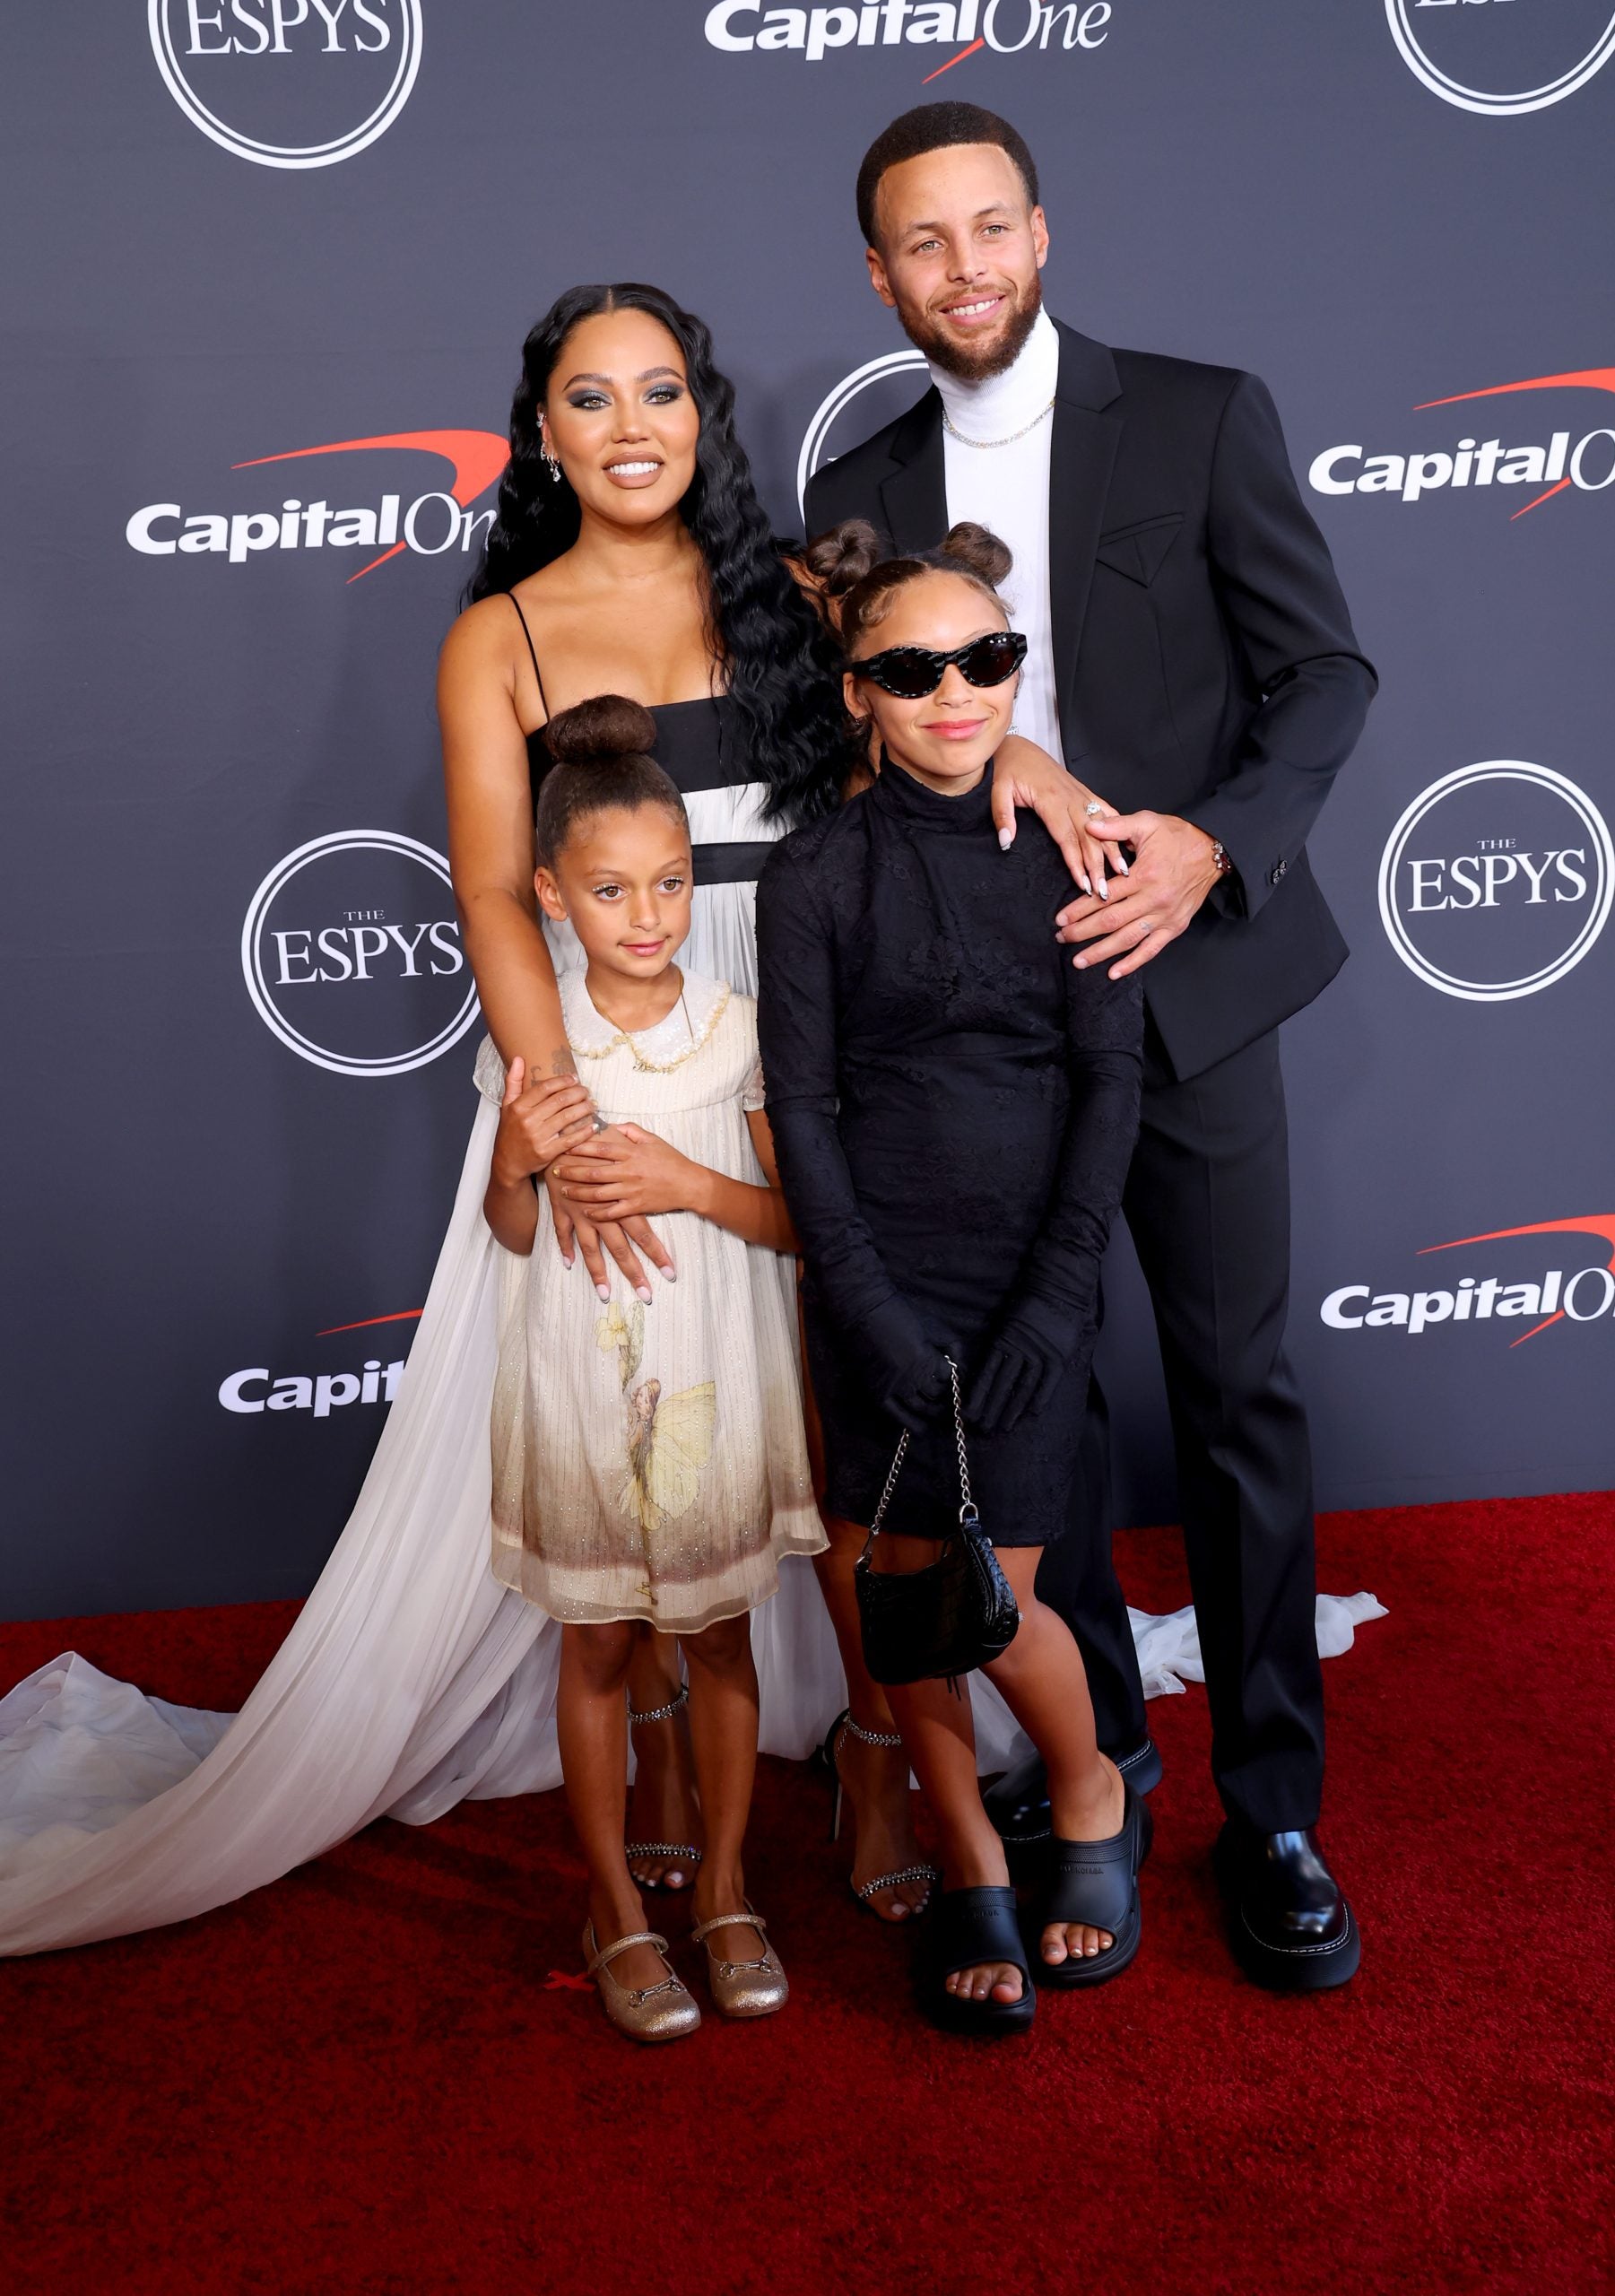 These Stars Made The 2022 ESPY Awards A Family Affair